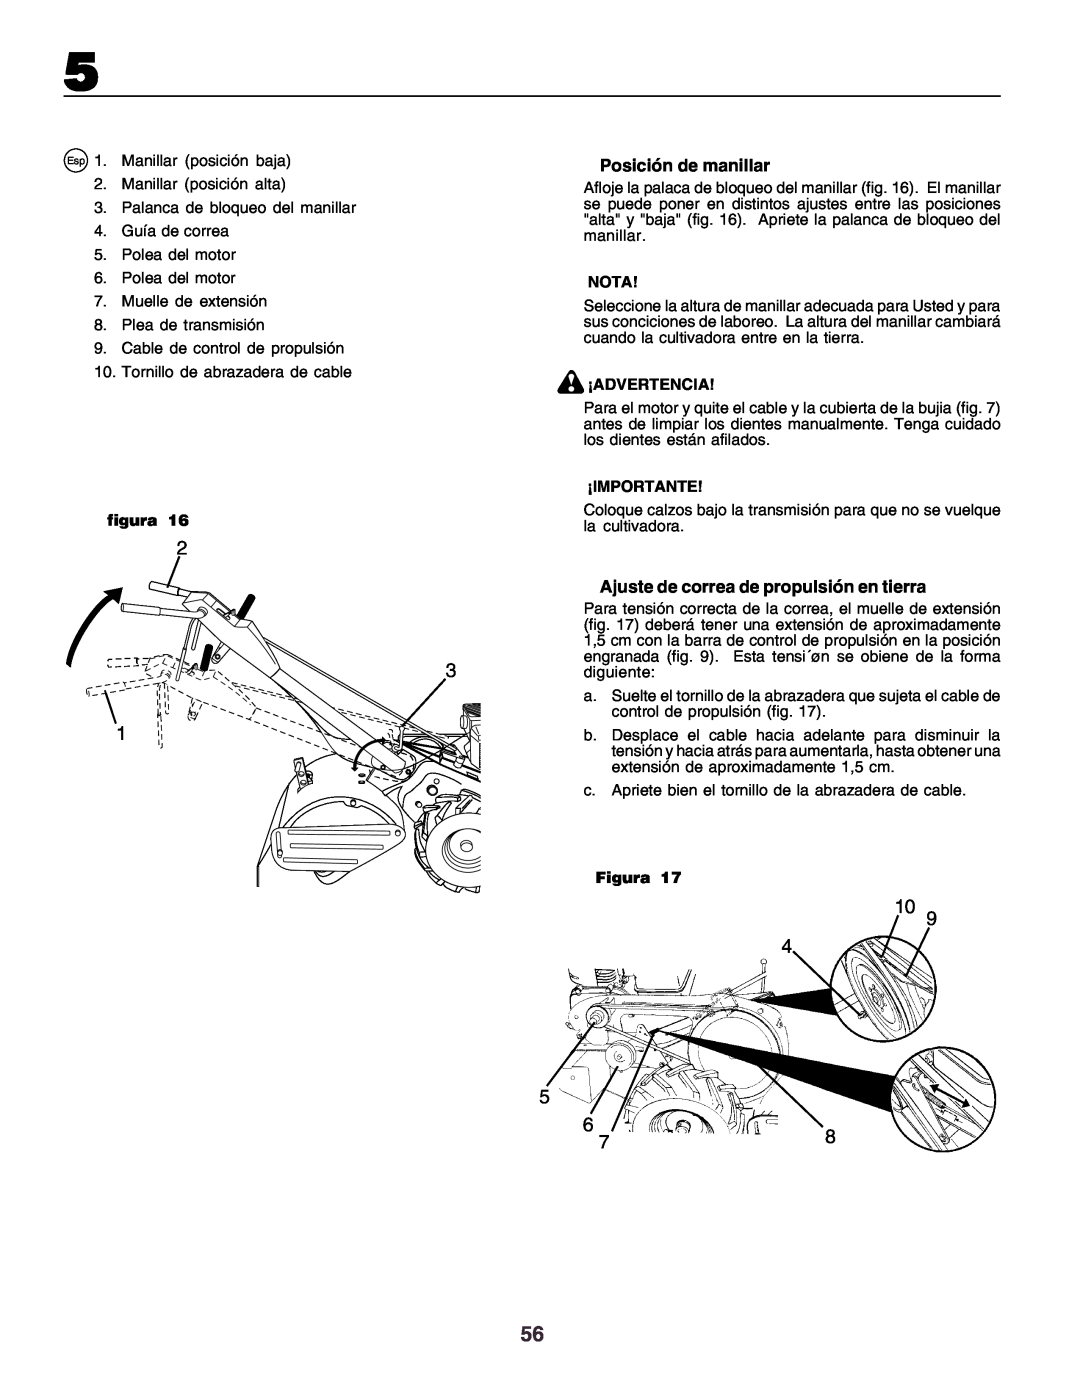 Husqvarna crt51 instruction manual 10 4 5, figura, Nota, ¡Advertencia, ¡Importante, Figura 